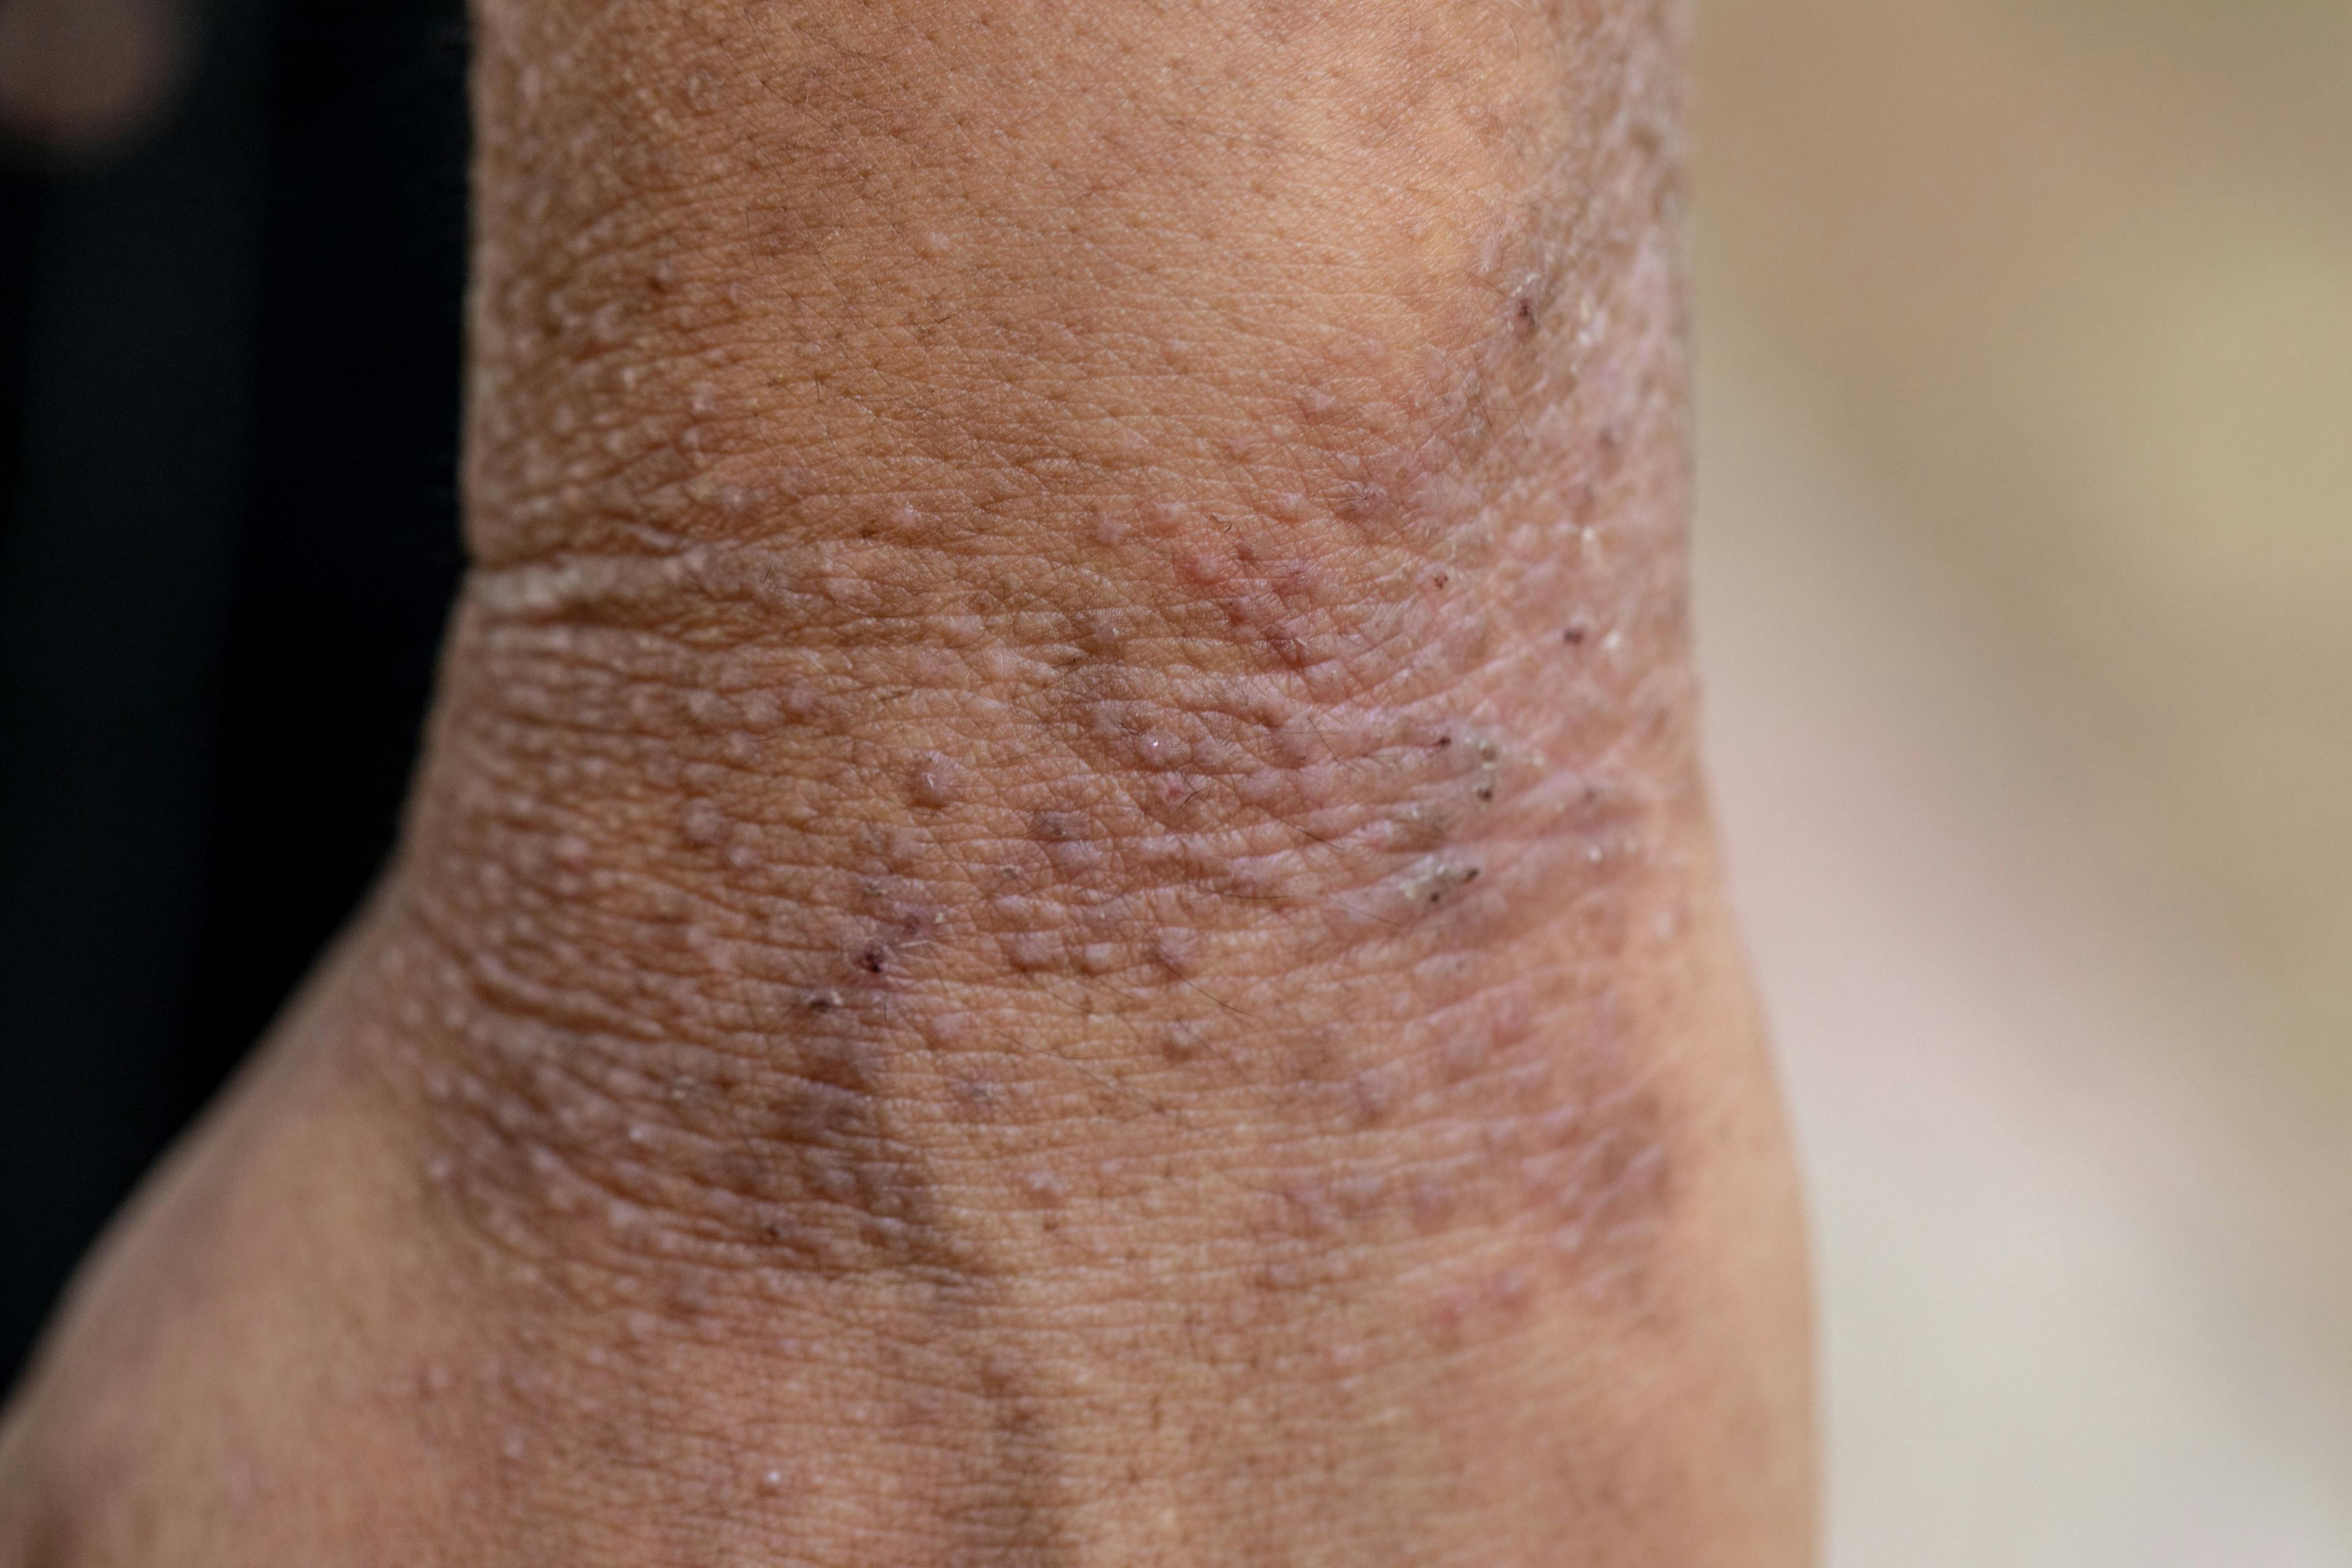 Atopic dermatitis | Image credit: sinhyu - stock.adobe.com